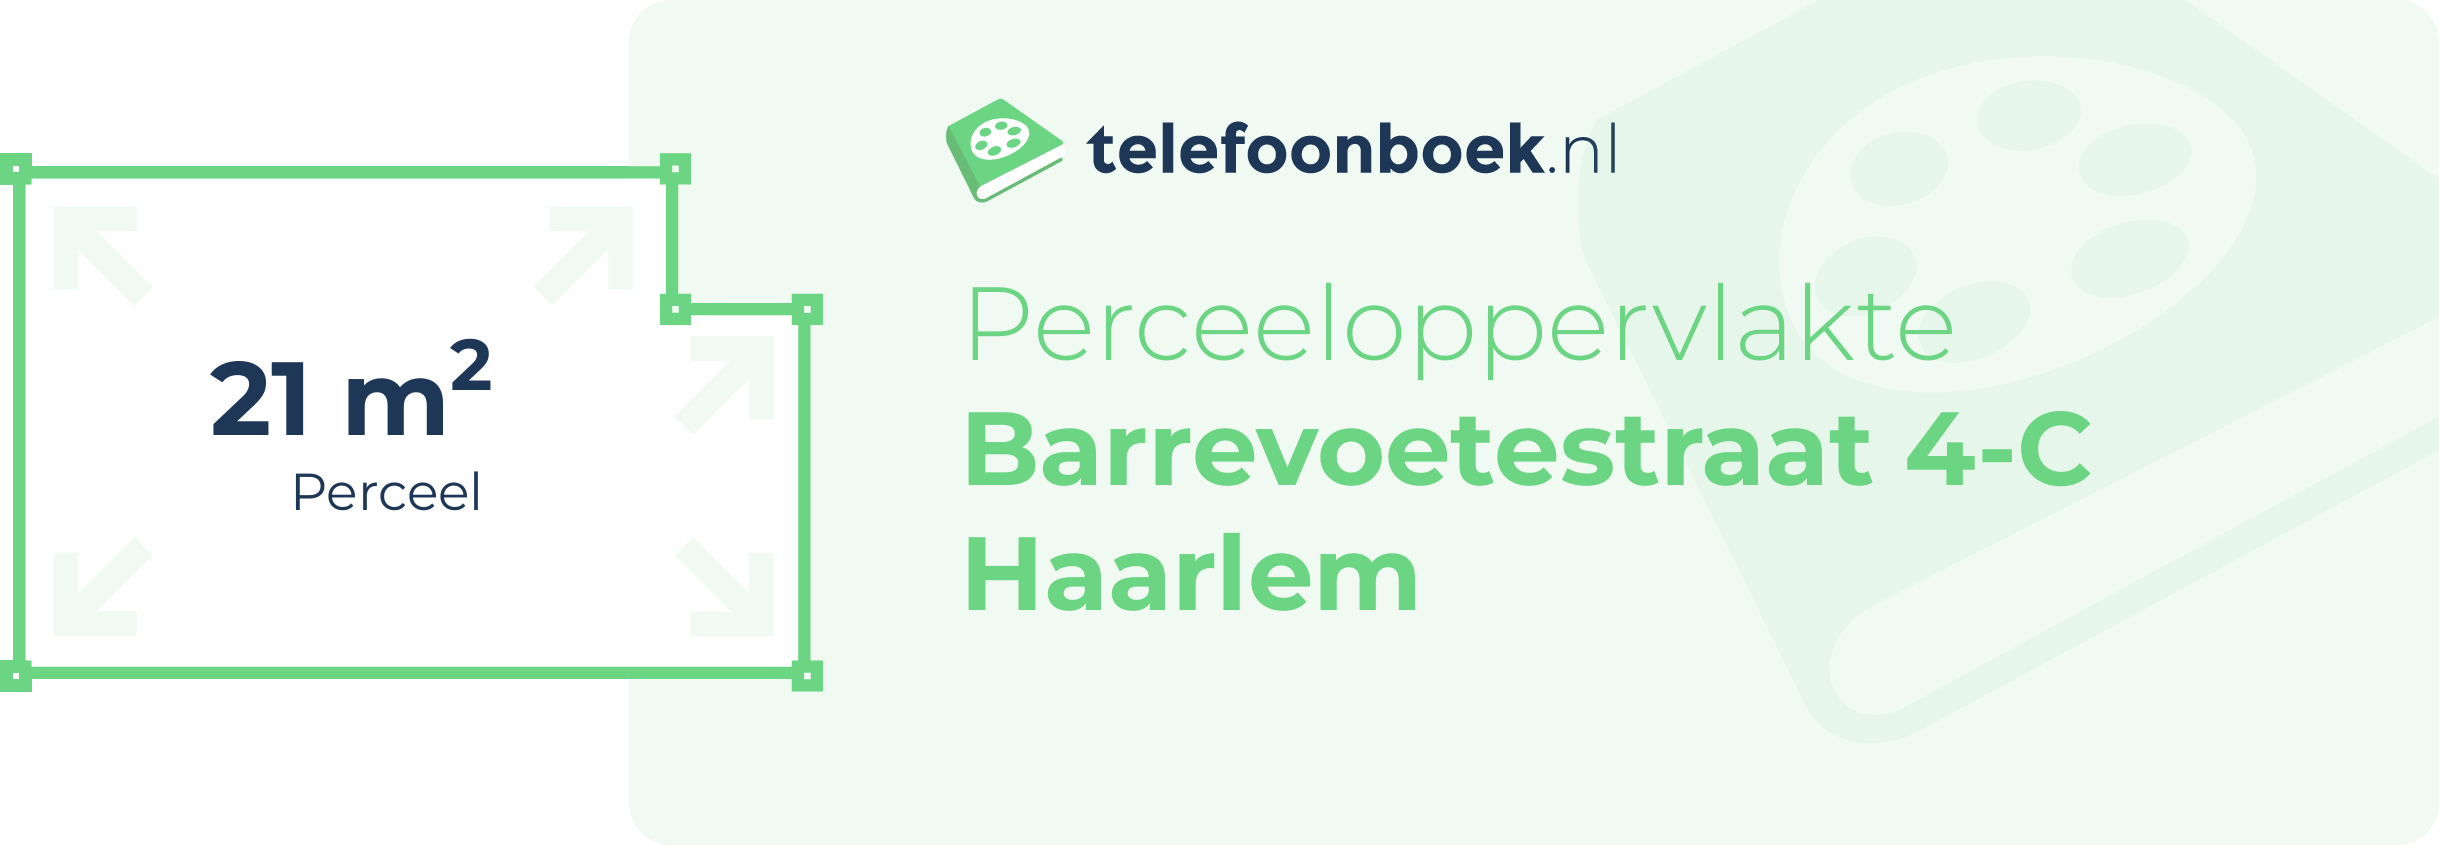 Perceeloppervlakte Barrevoetestraat 4-C Haarlem